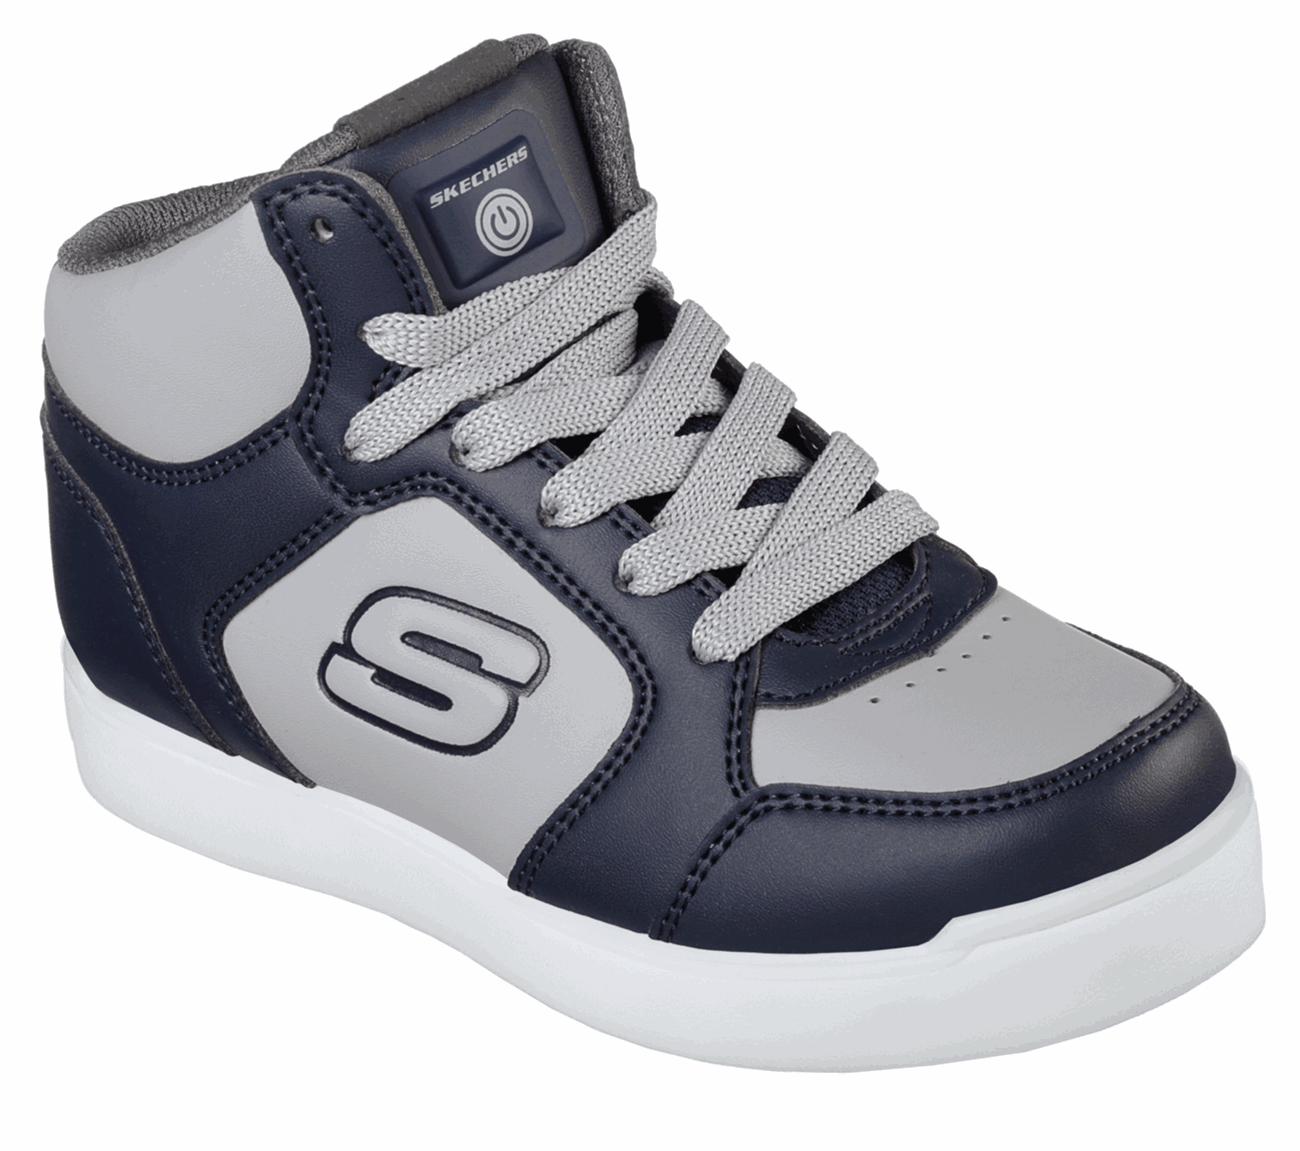 Buy SKECHERS S Lights: Energy Lights - E-Pro S-Lights Shoes